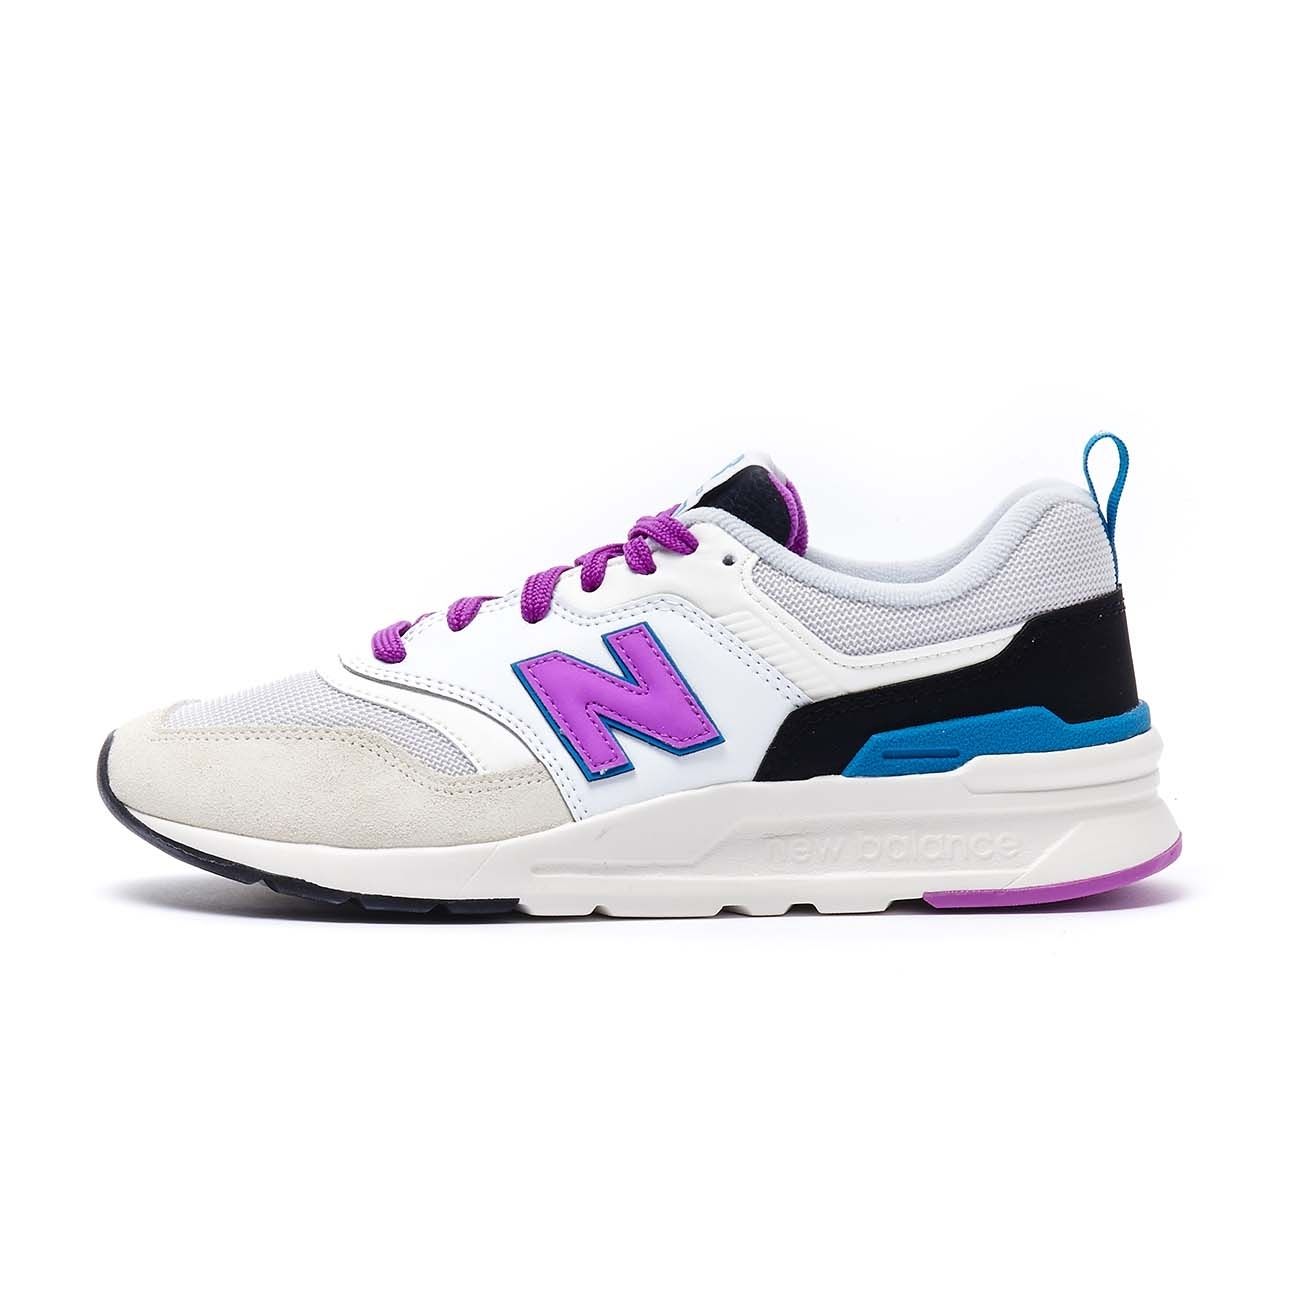 new balance 997 white purple